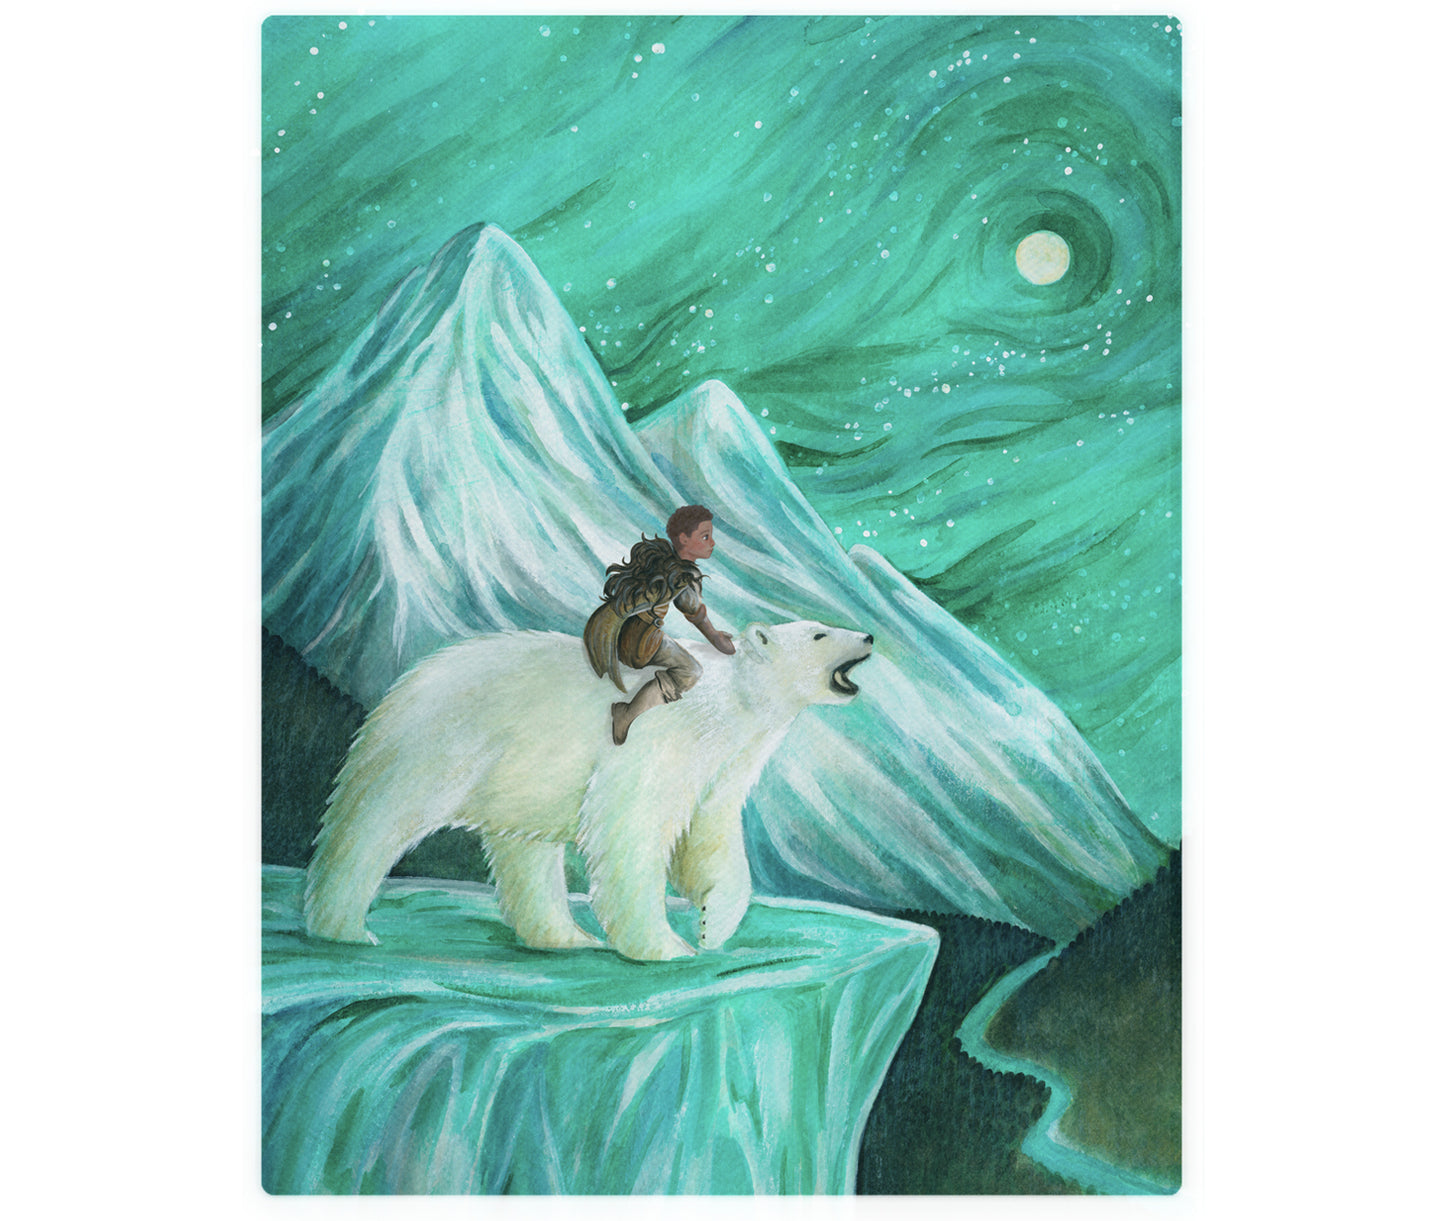 Polar Bear: Customize Your Child In A Fairytale Painting